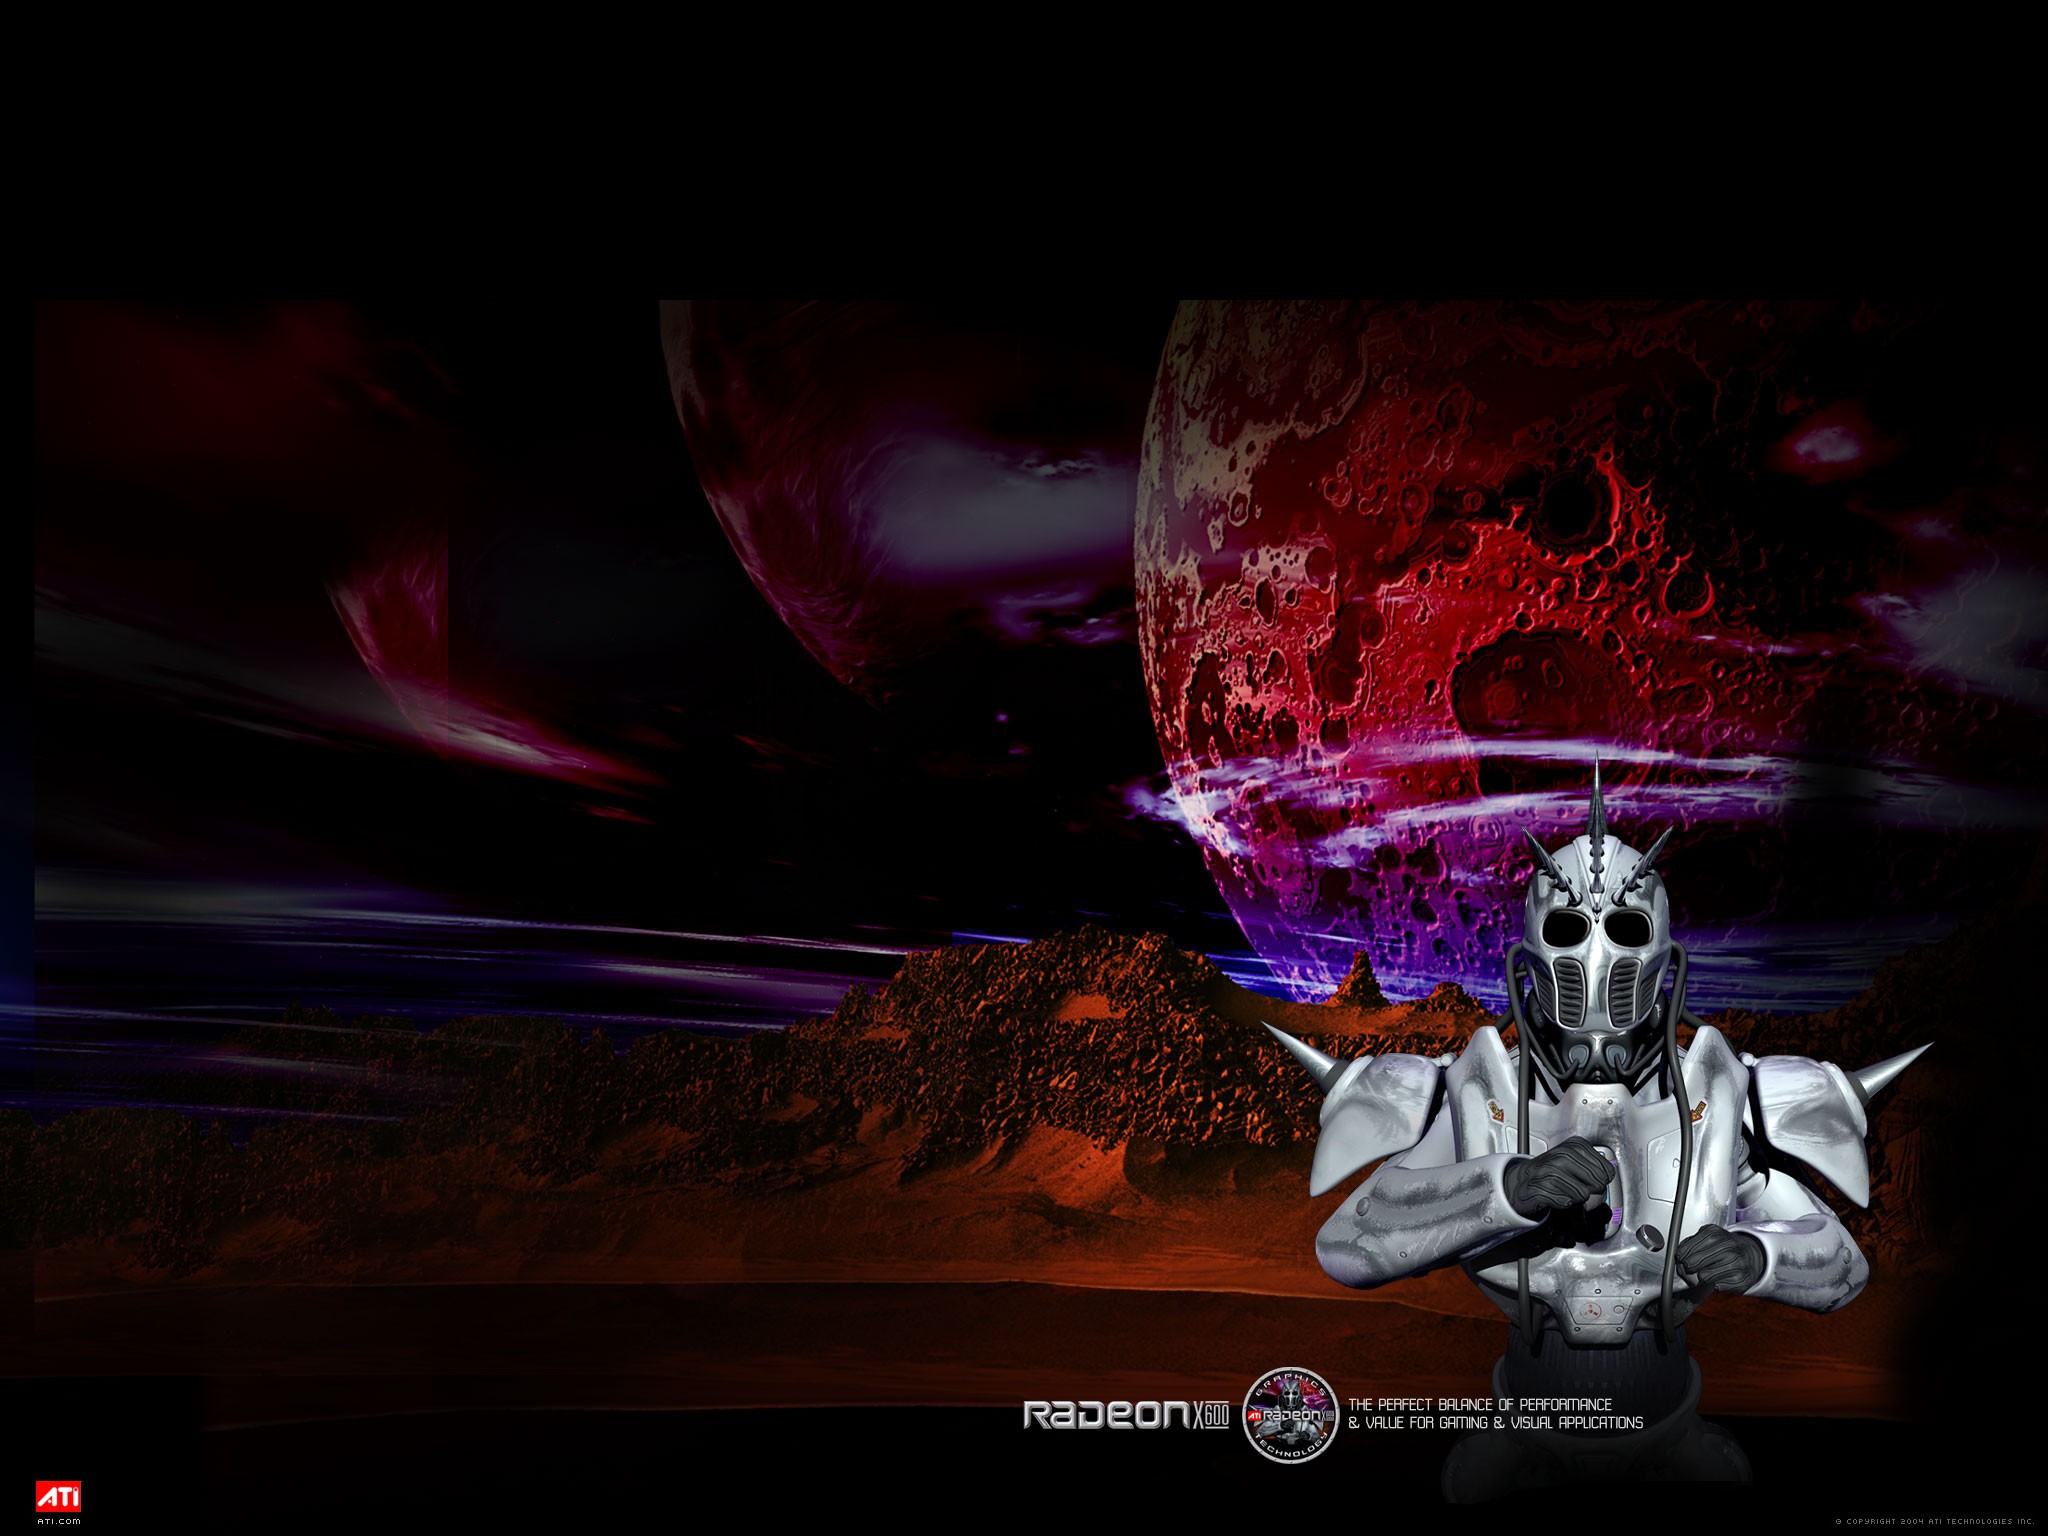 General 2048x1536 artwork planet robot Radeon digital art watermarked